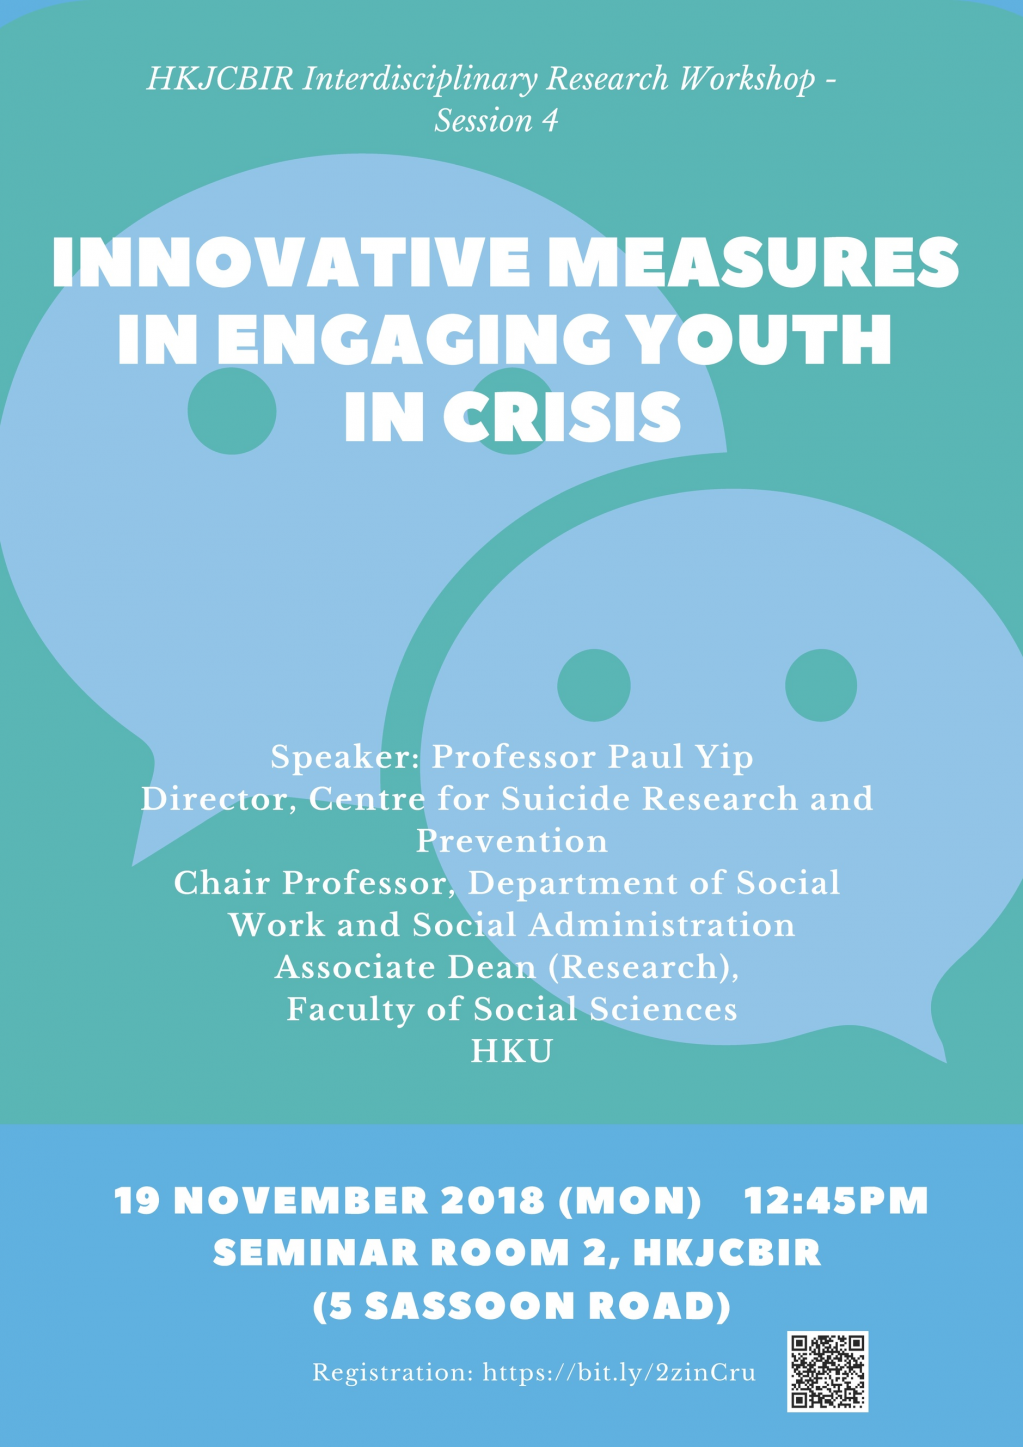 HKJCBIR Interdisciplinary Research Workshop Series (4) - Innovative Mesaures in Engaging Youth in Crisis